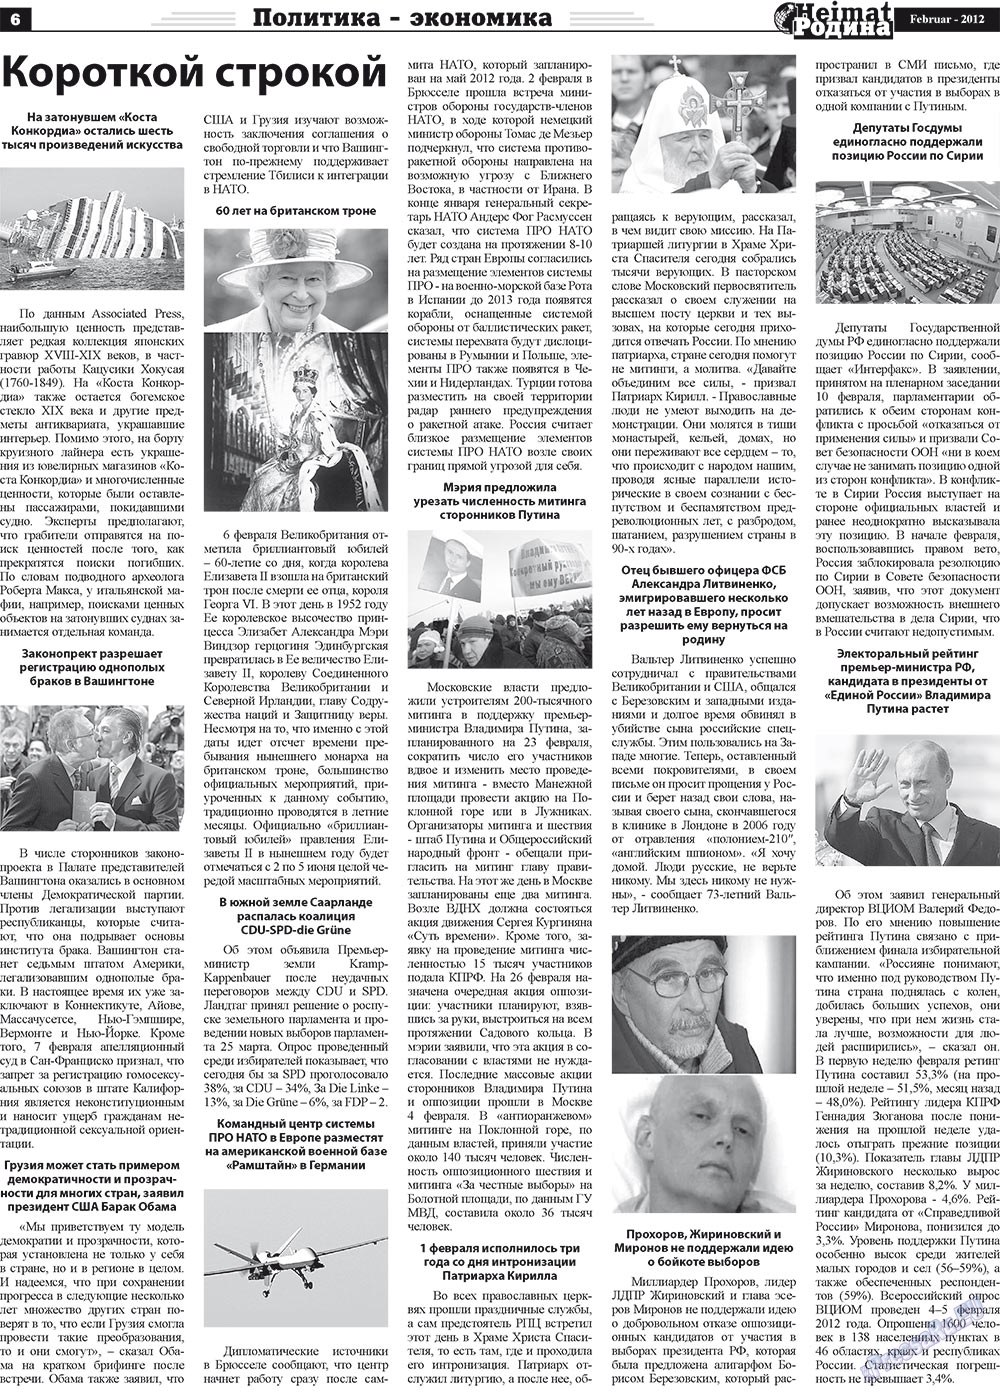 Heimat-Родина, газета. 2012 №2 стр.6